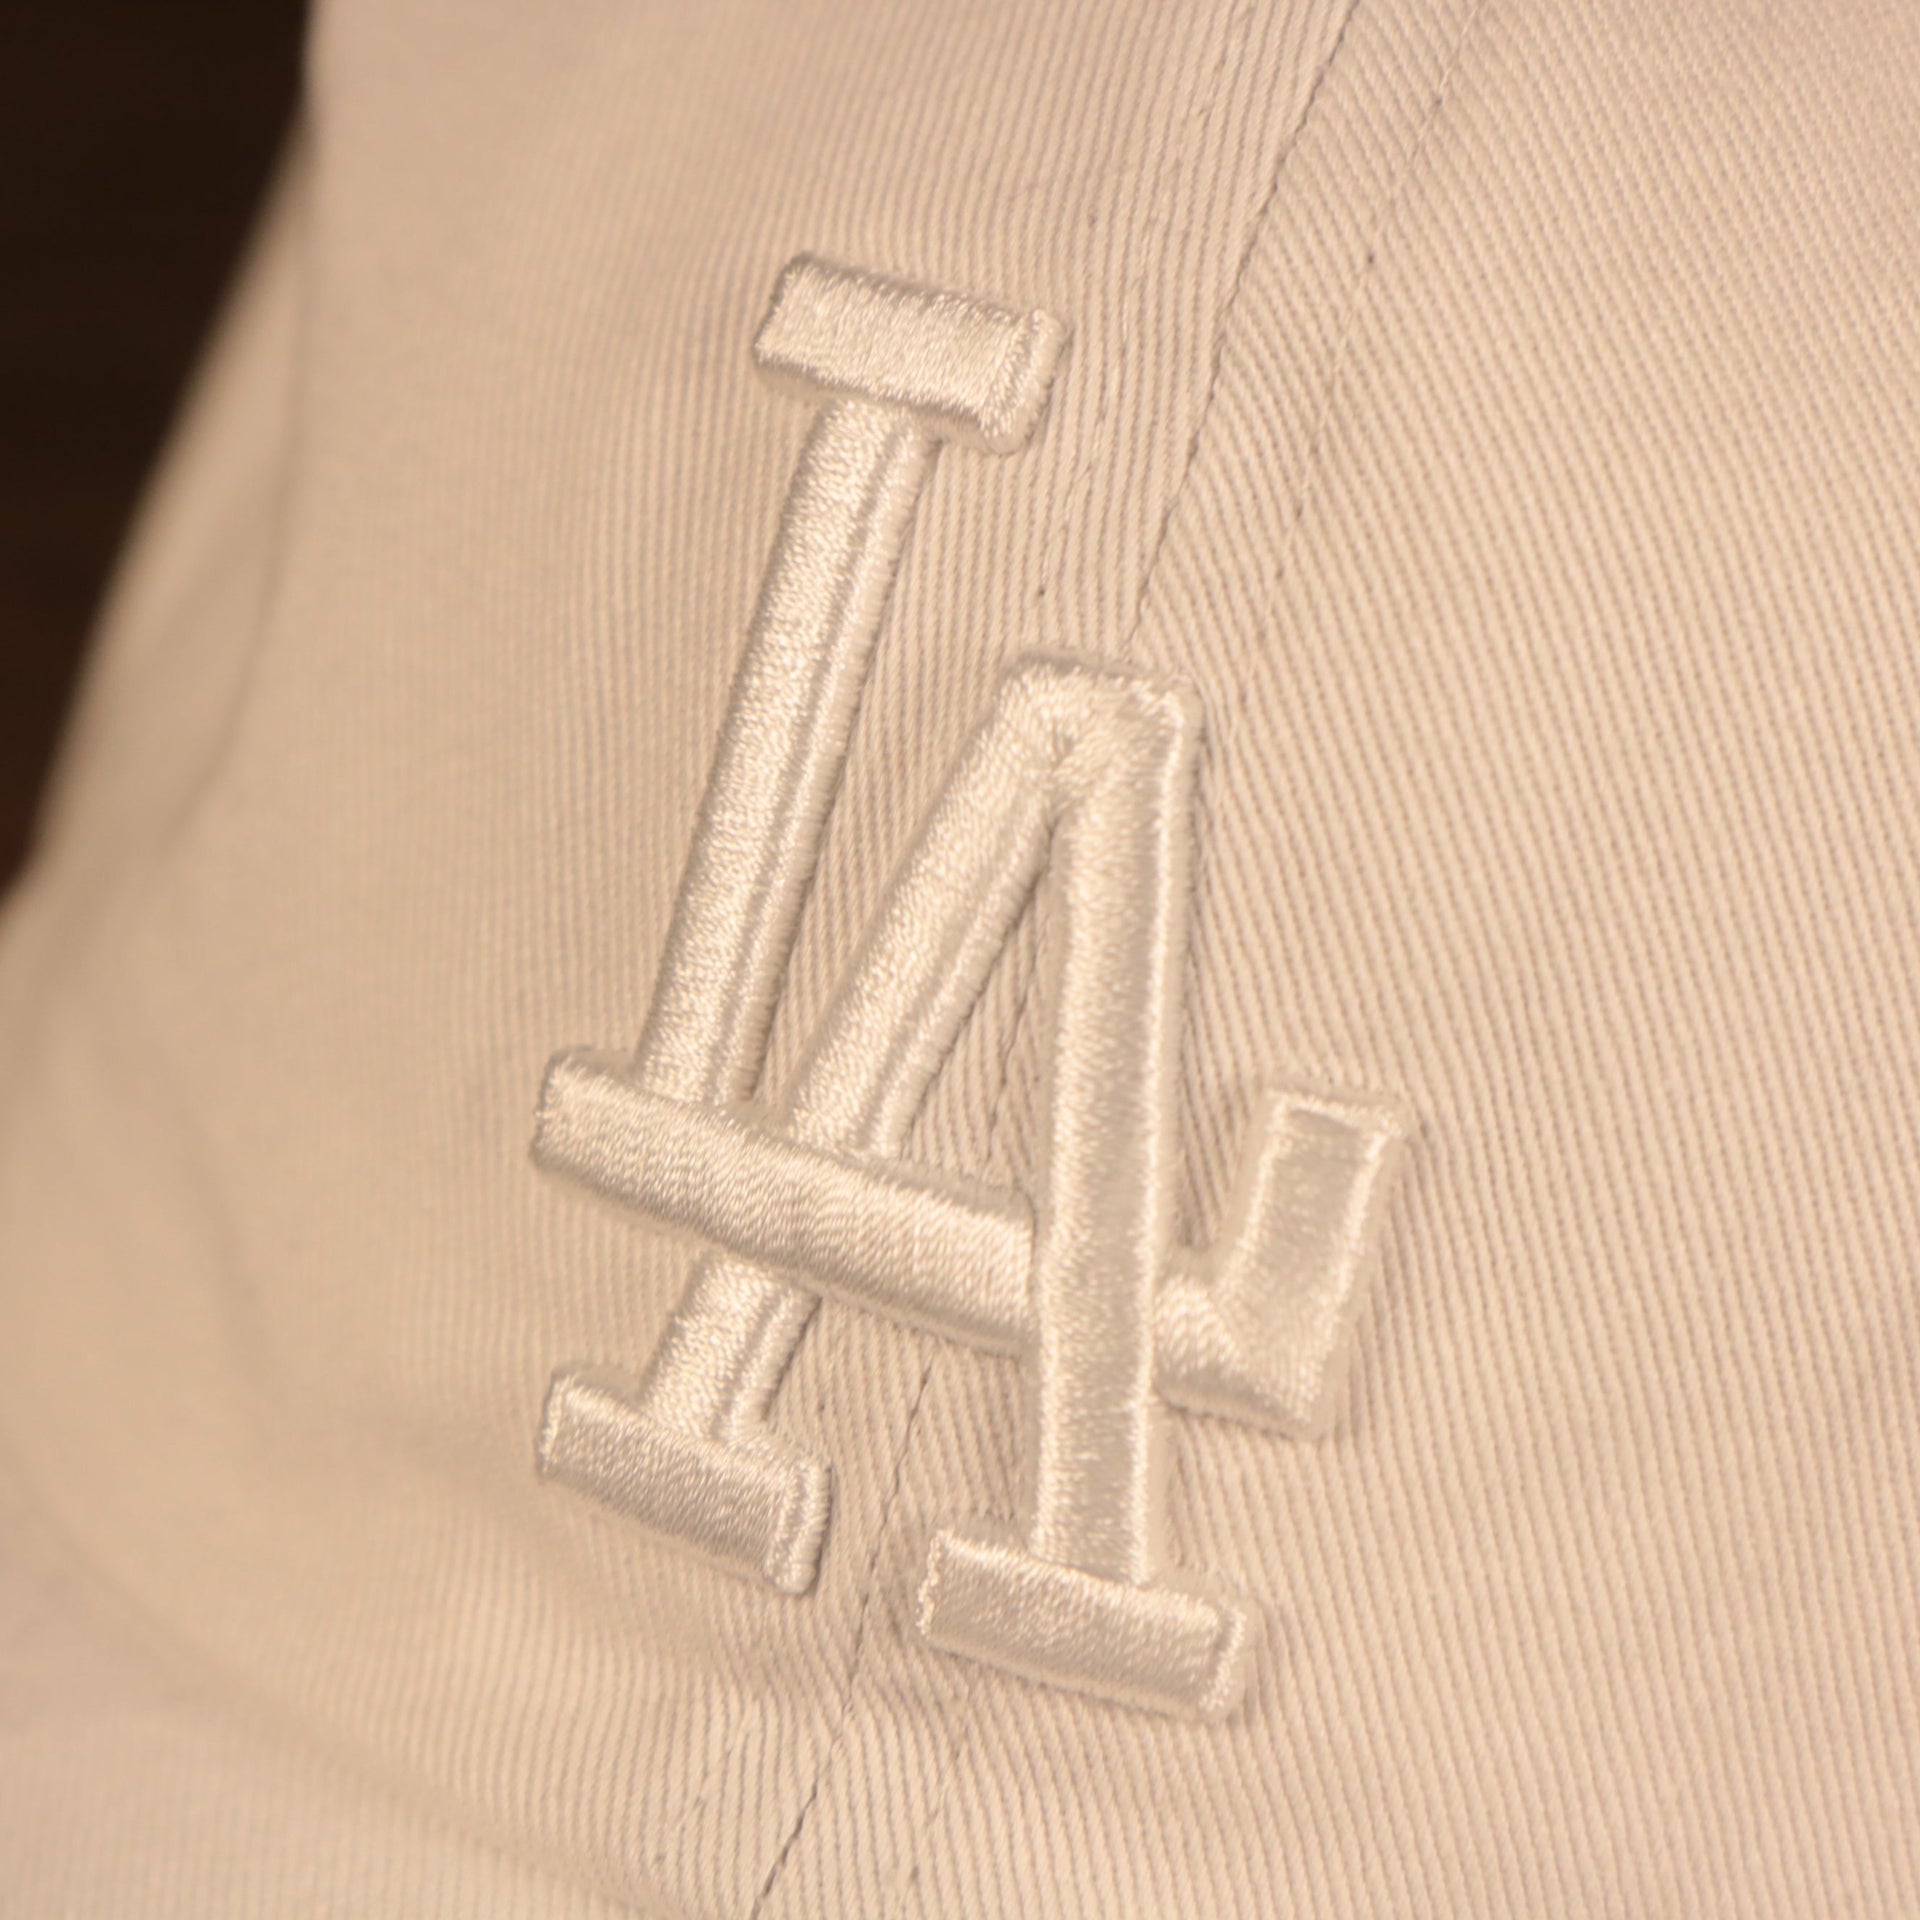 Los Angeles Dodgers Tie Dye Bottom White Clean Up Dad Hat  Up close front LA Dodgers logo of the cap